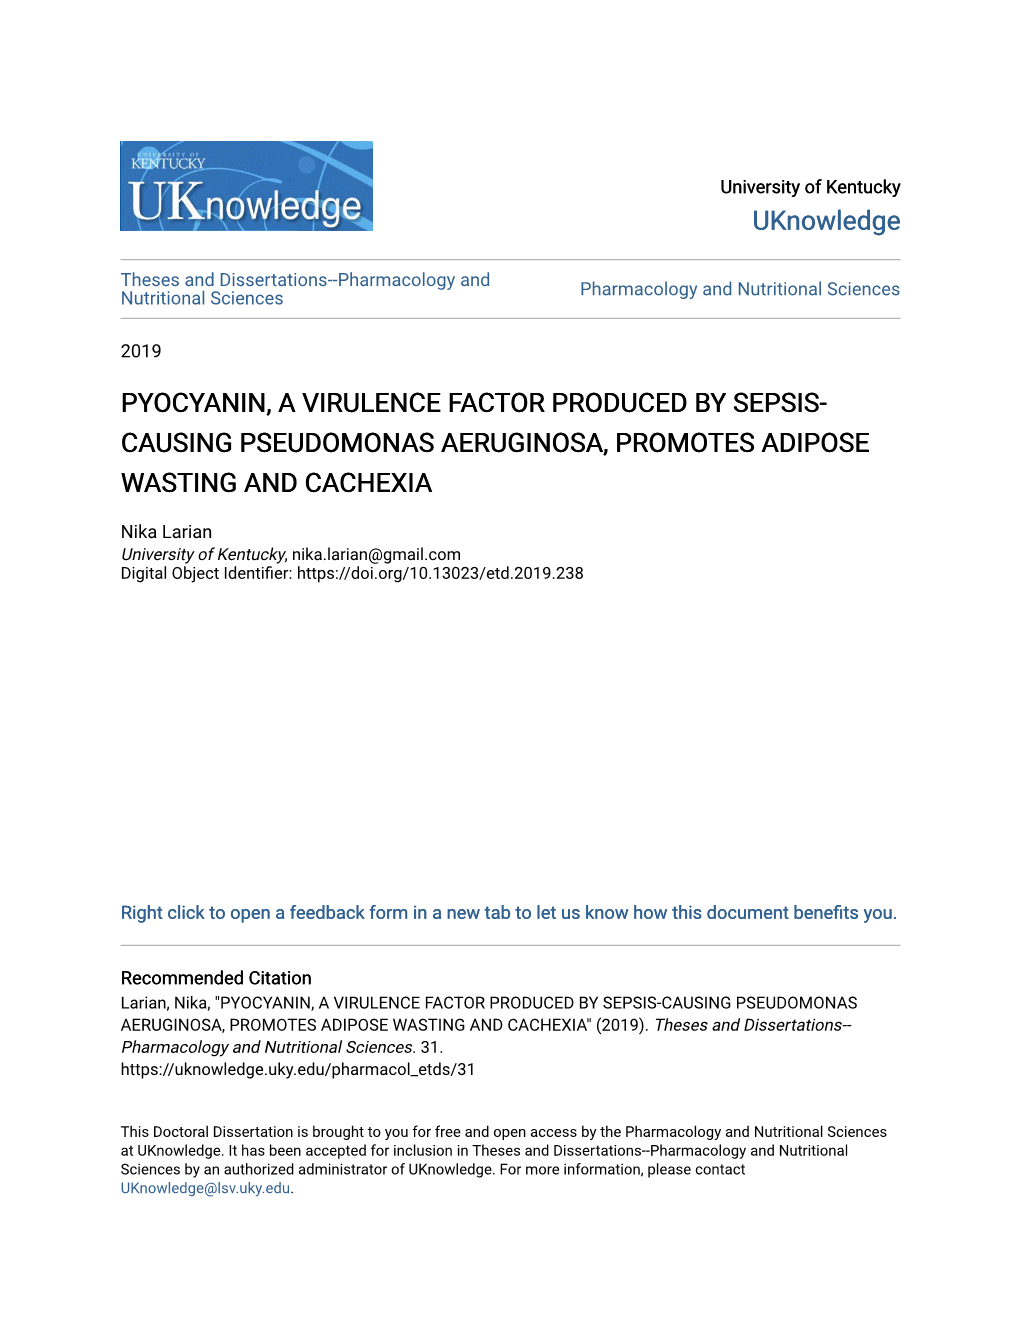 Pyocyanin, a Virulence Factor Produced by Sepsis- Causing Pseudomonas Aeruginosa, Promotes Adipose Wasting and Cachexia